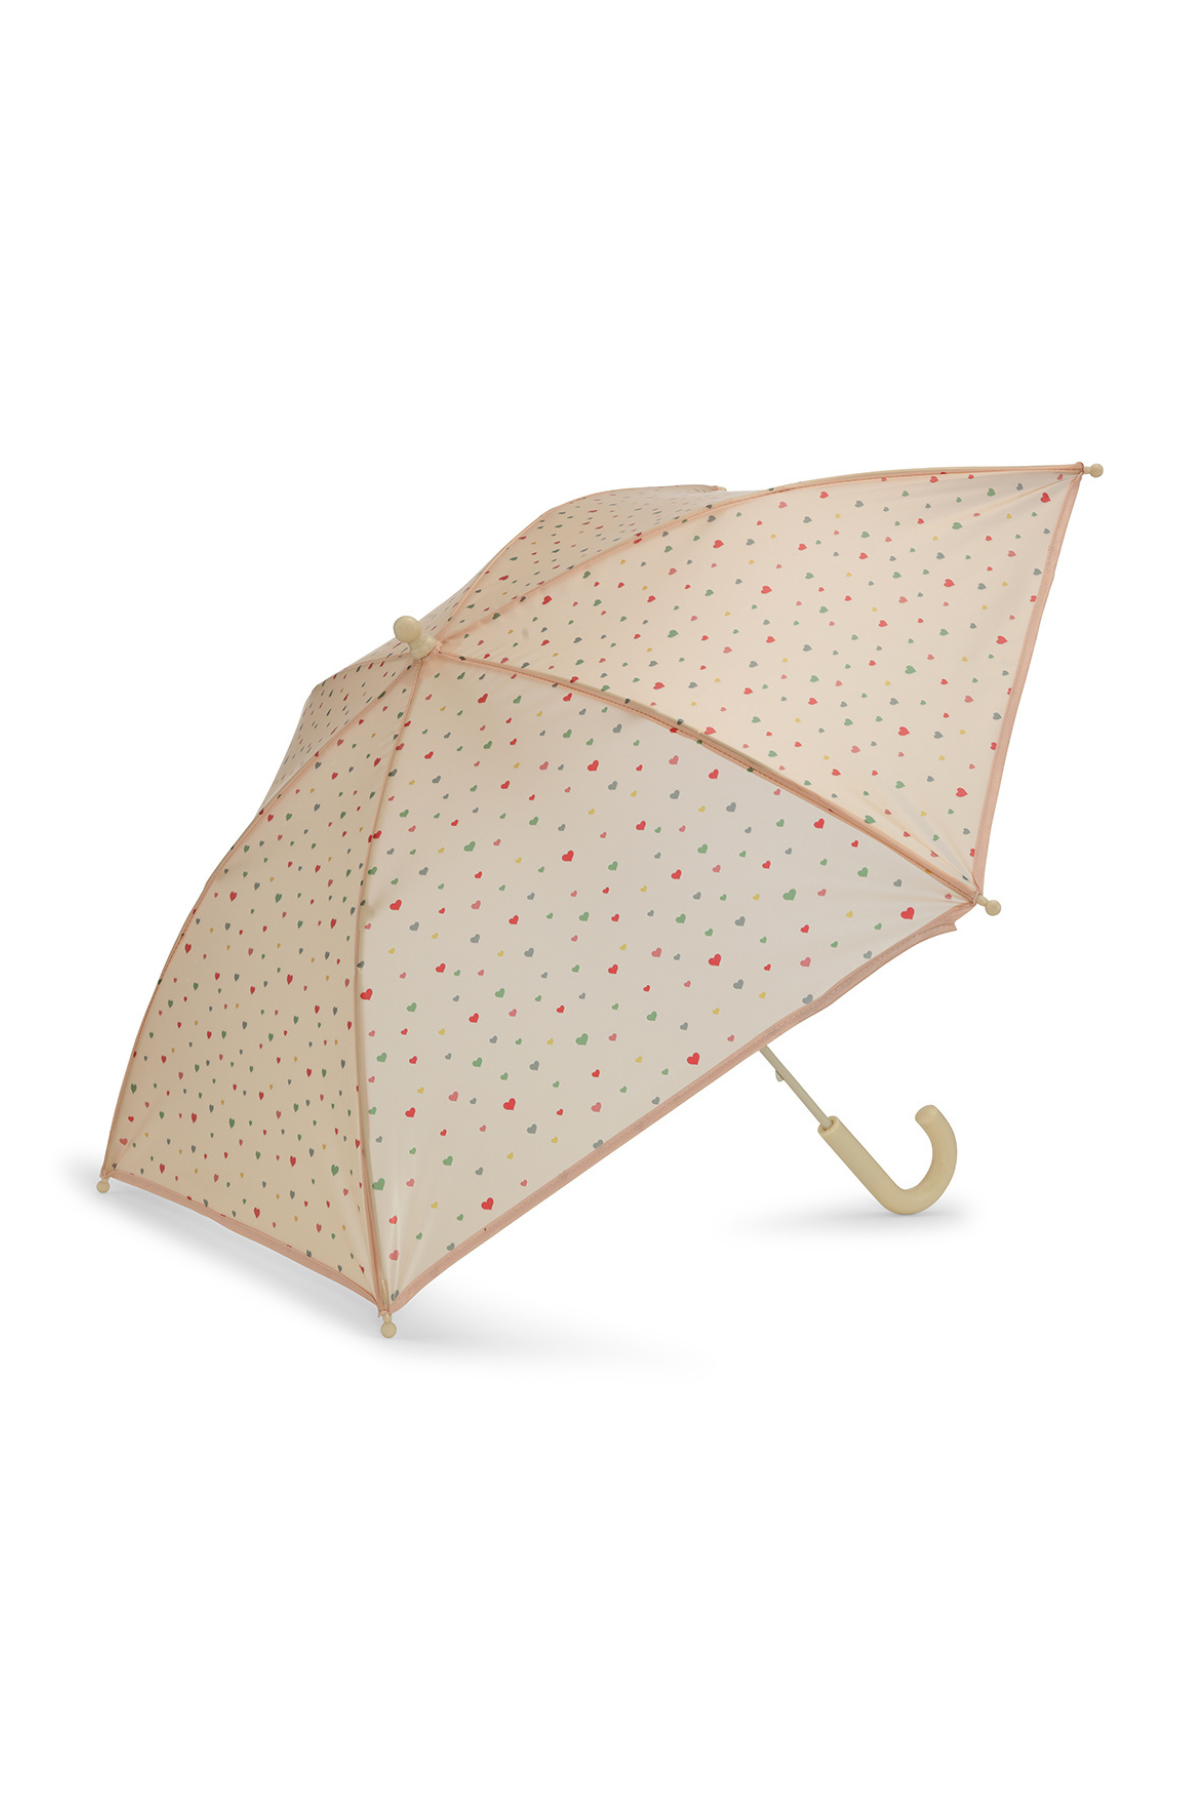 Regenschirm "Glitzer Herzis"